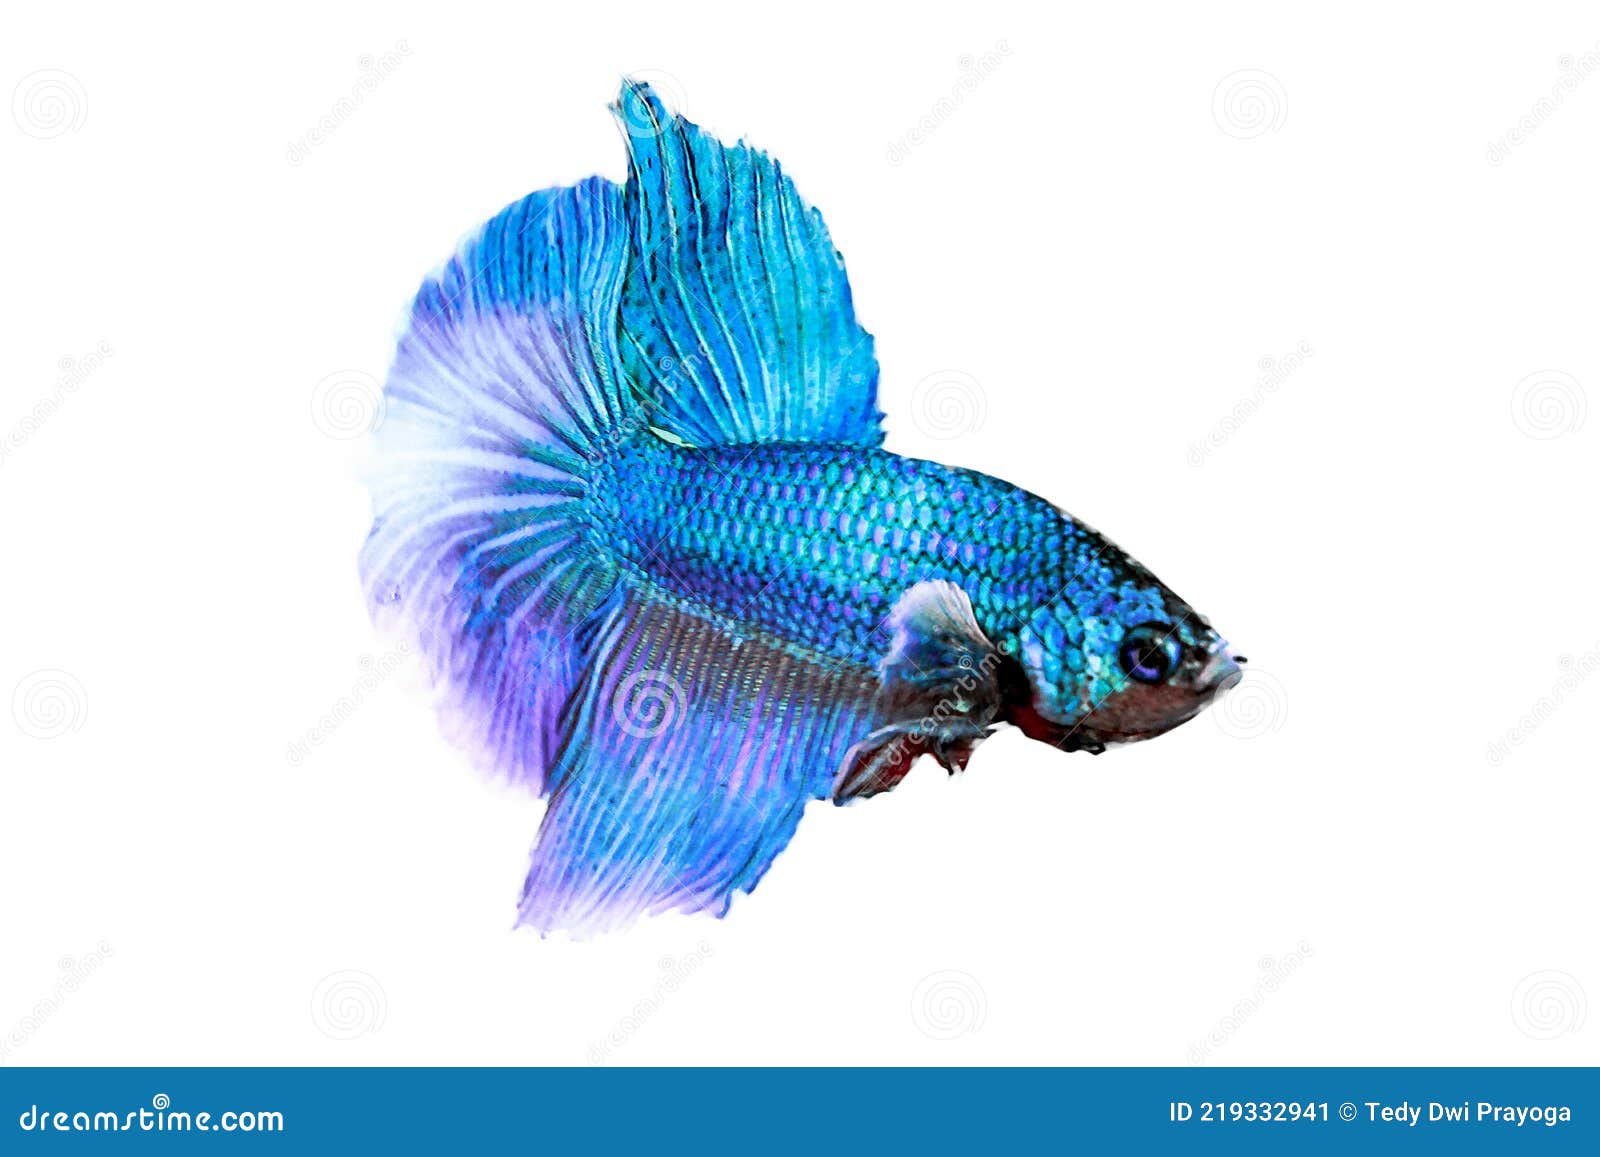 Water Animal Concept: Betta Fish, Siamese Fighting Fish, Splendens, Betta  Mandor, Giant Betta, Blue Purple Fish, Isolated Over Stock Image - Image of  design, black: 219332941